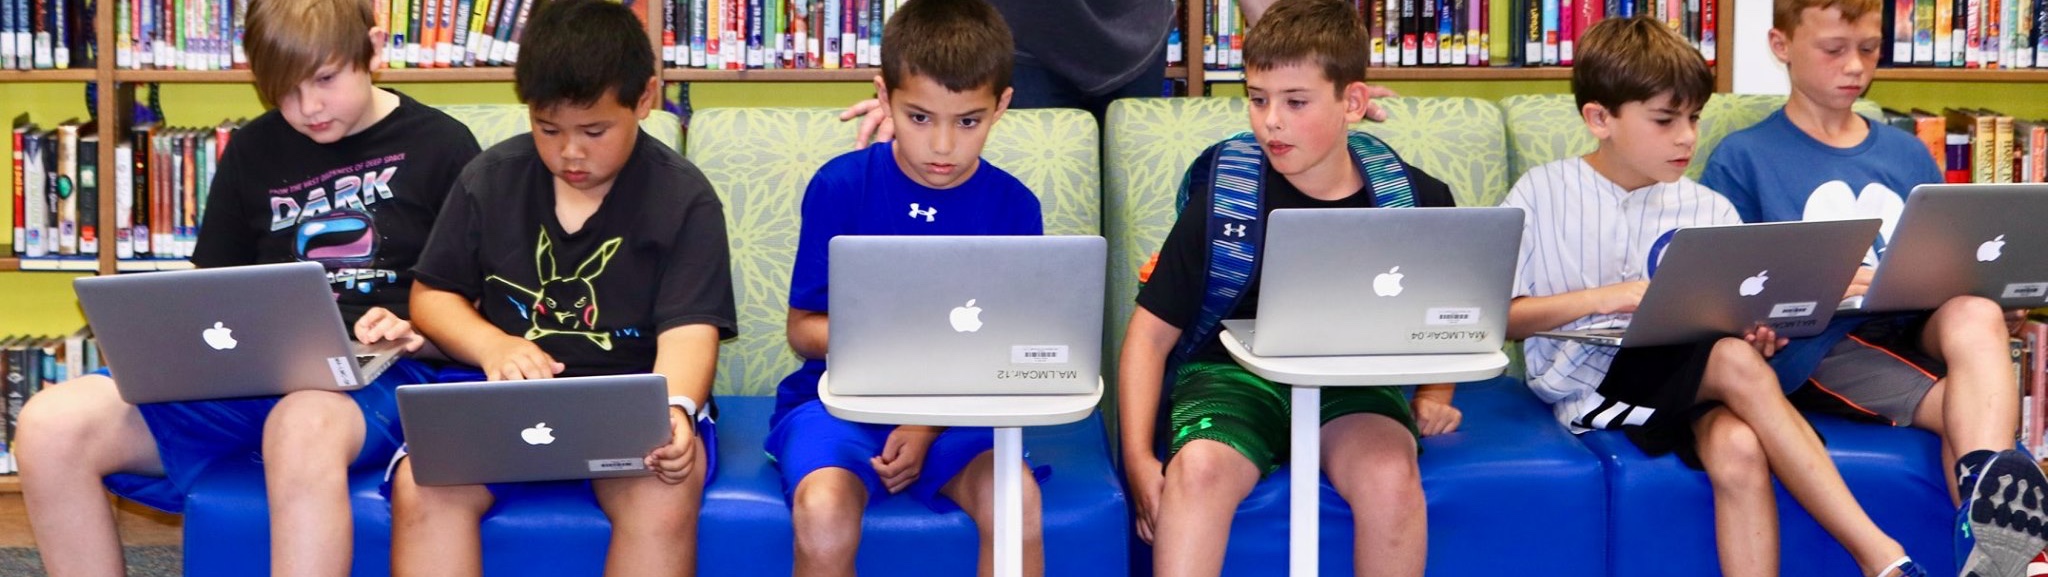 Students using laptops